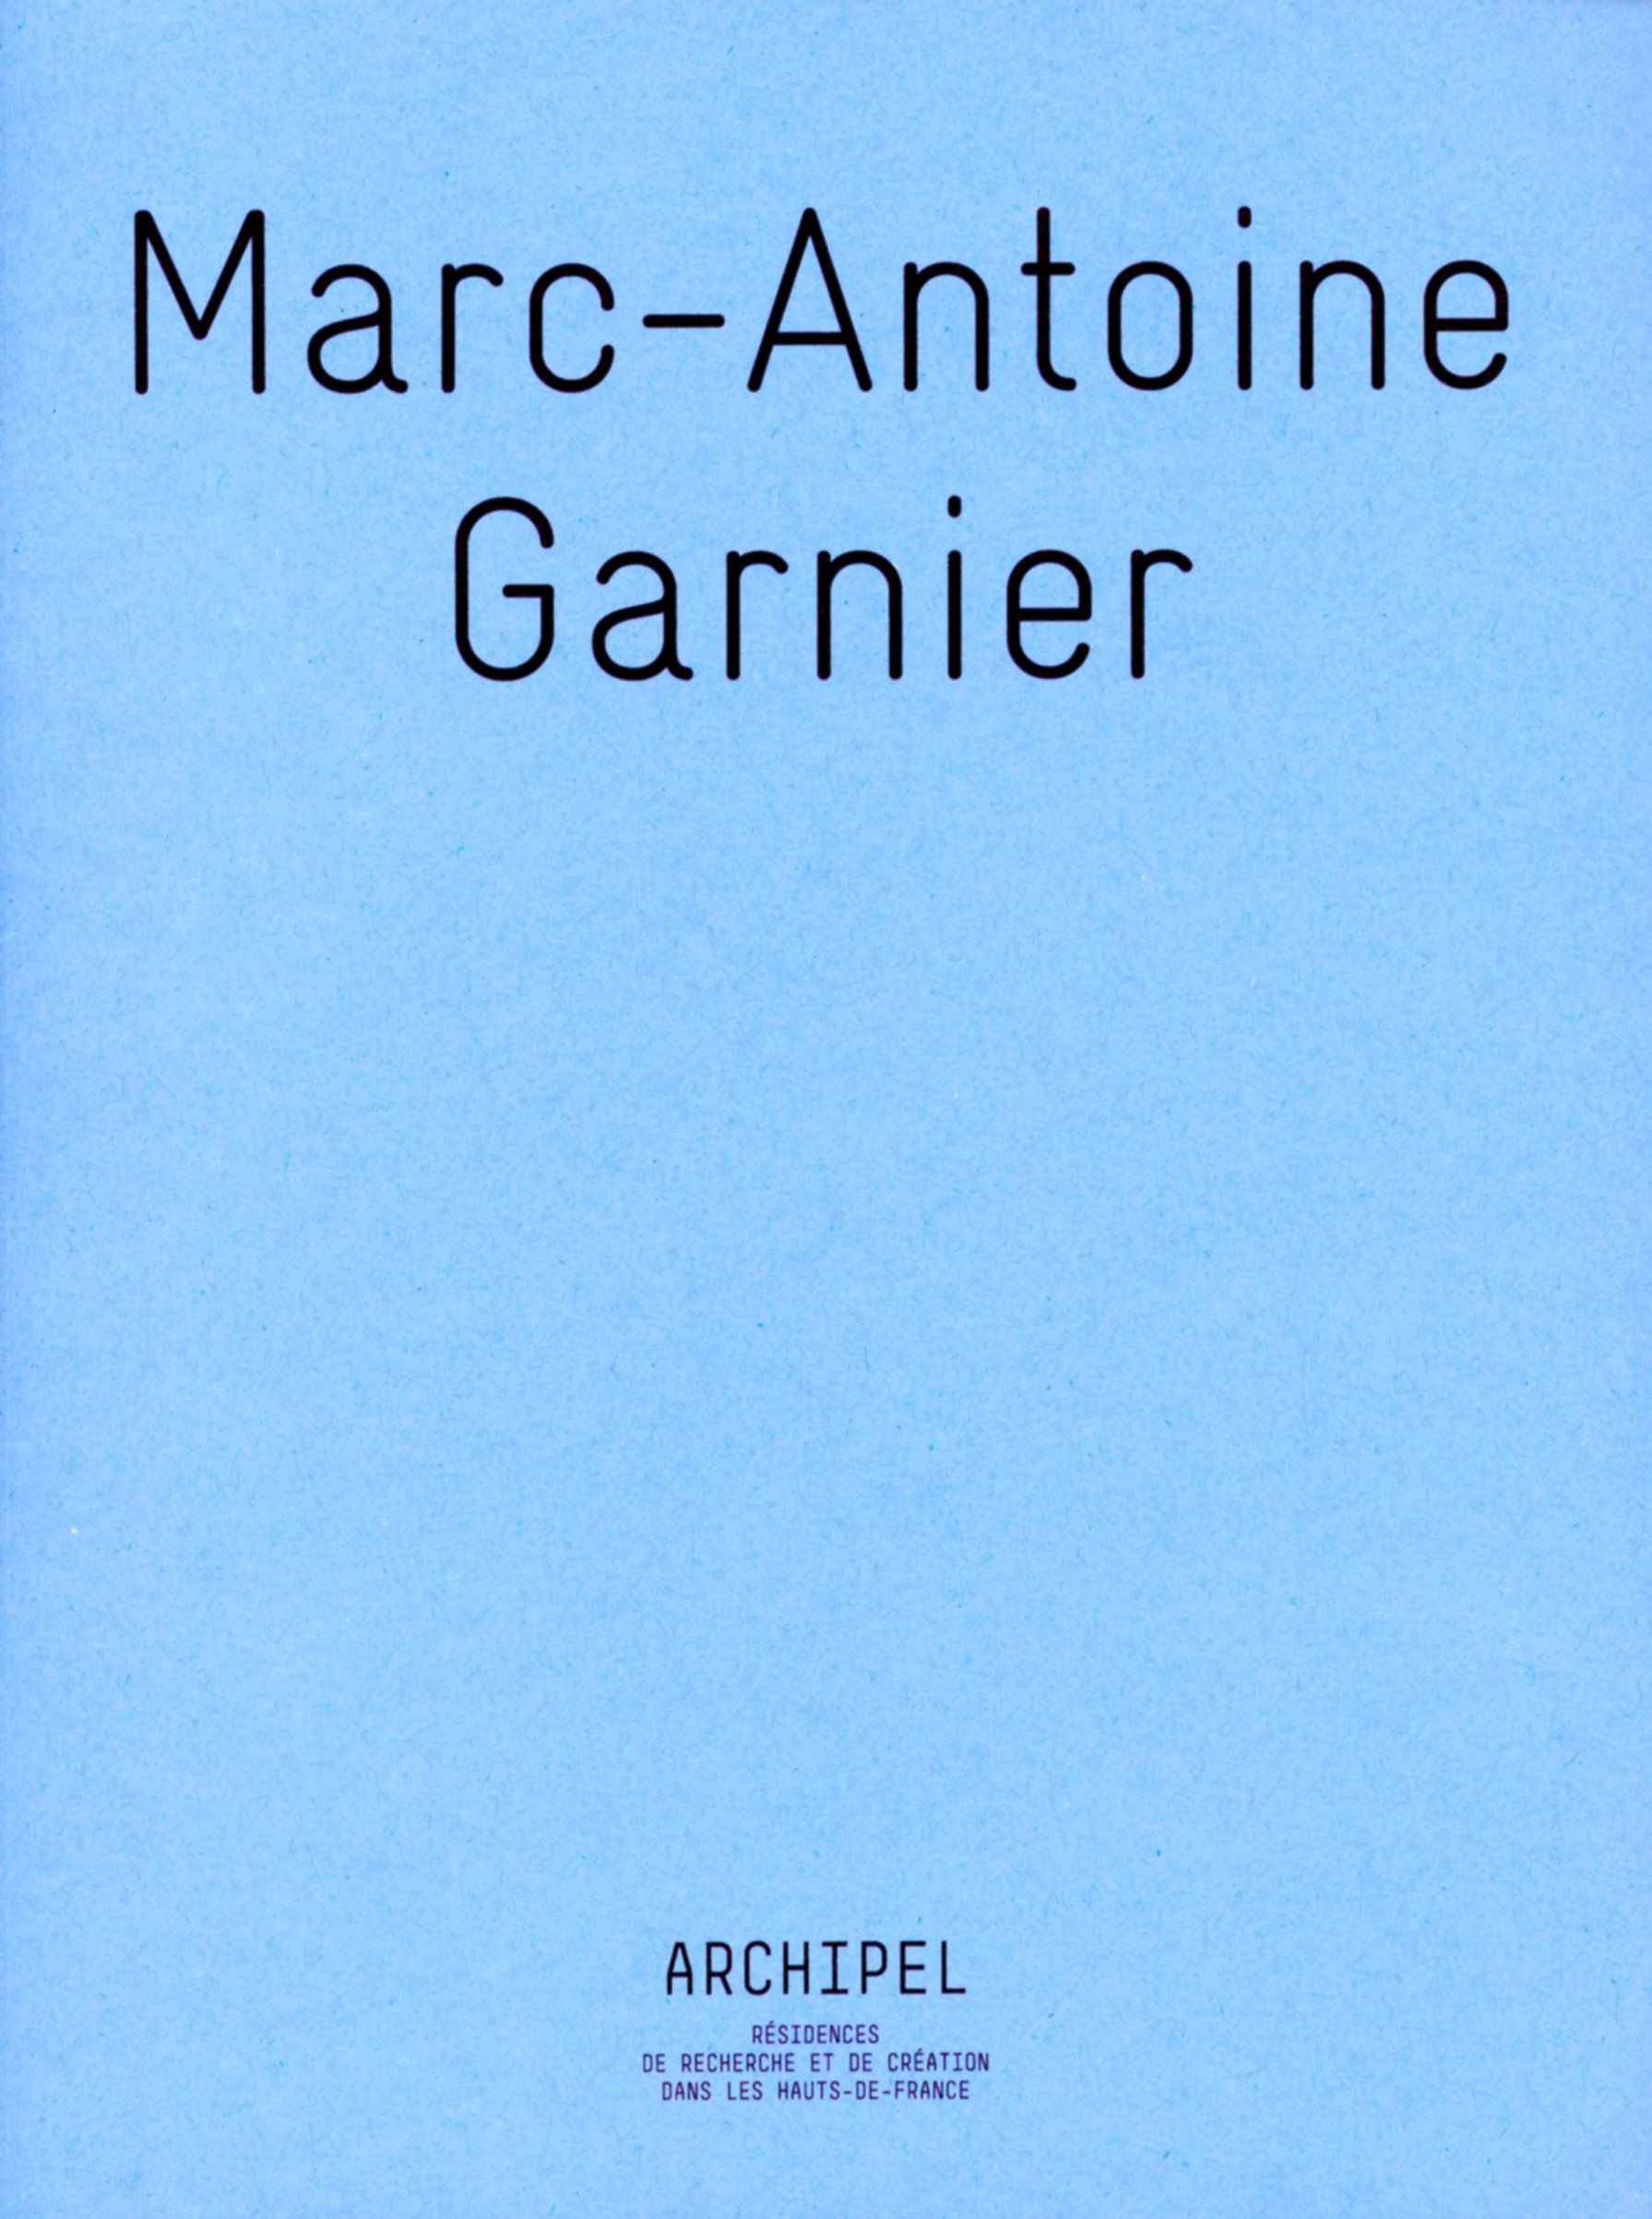 Project, Marc-Antoine Garnier